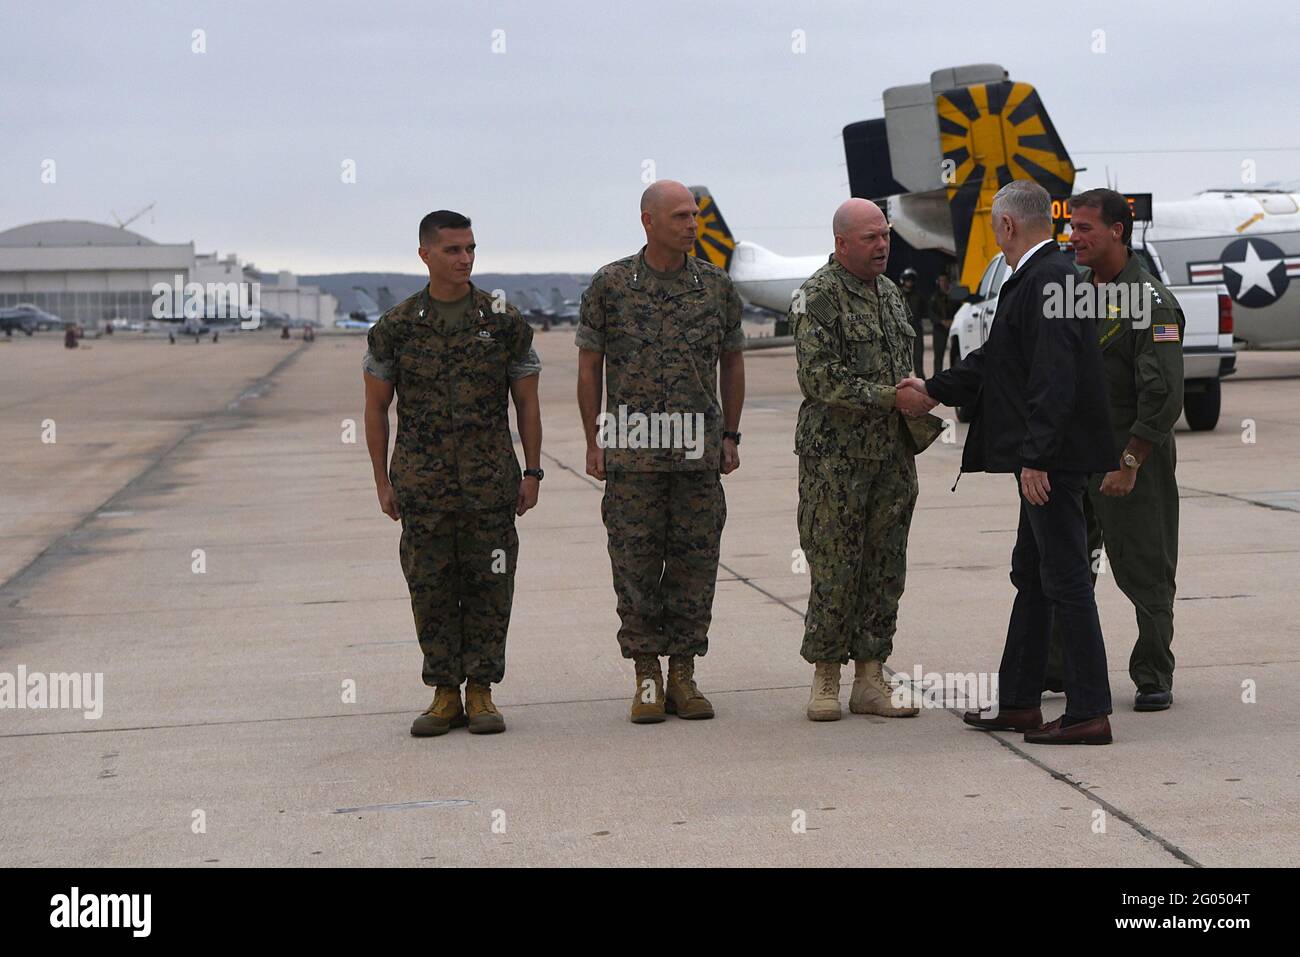 US-Verteidigungsminister James N. Mattis begrüßt den Kommandanten der 3. US-Flotte, Navy Vice ADM. John Alexander, bei der Ankunft an der Marine Corps Air Station, Miramar, Kalifornien, 3. September 2018. Mattis reiste nach Kalifornien, um das Training der Trägerstreikgruppe zu beobachten. Stockfoto